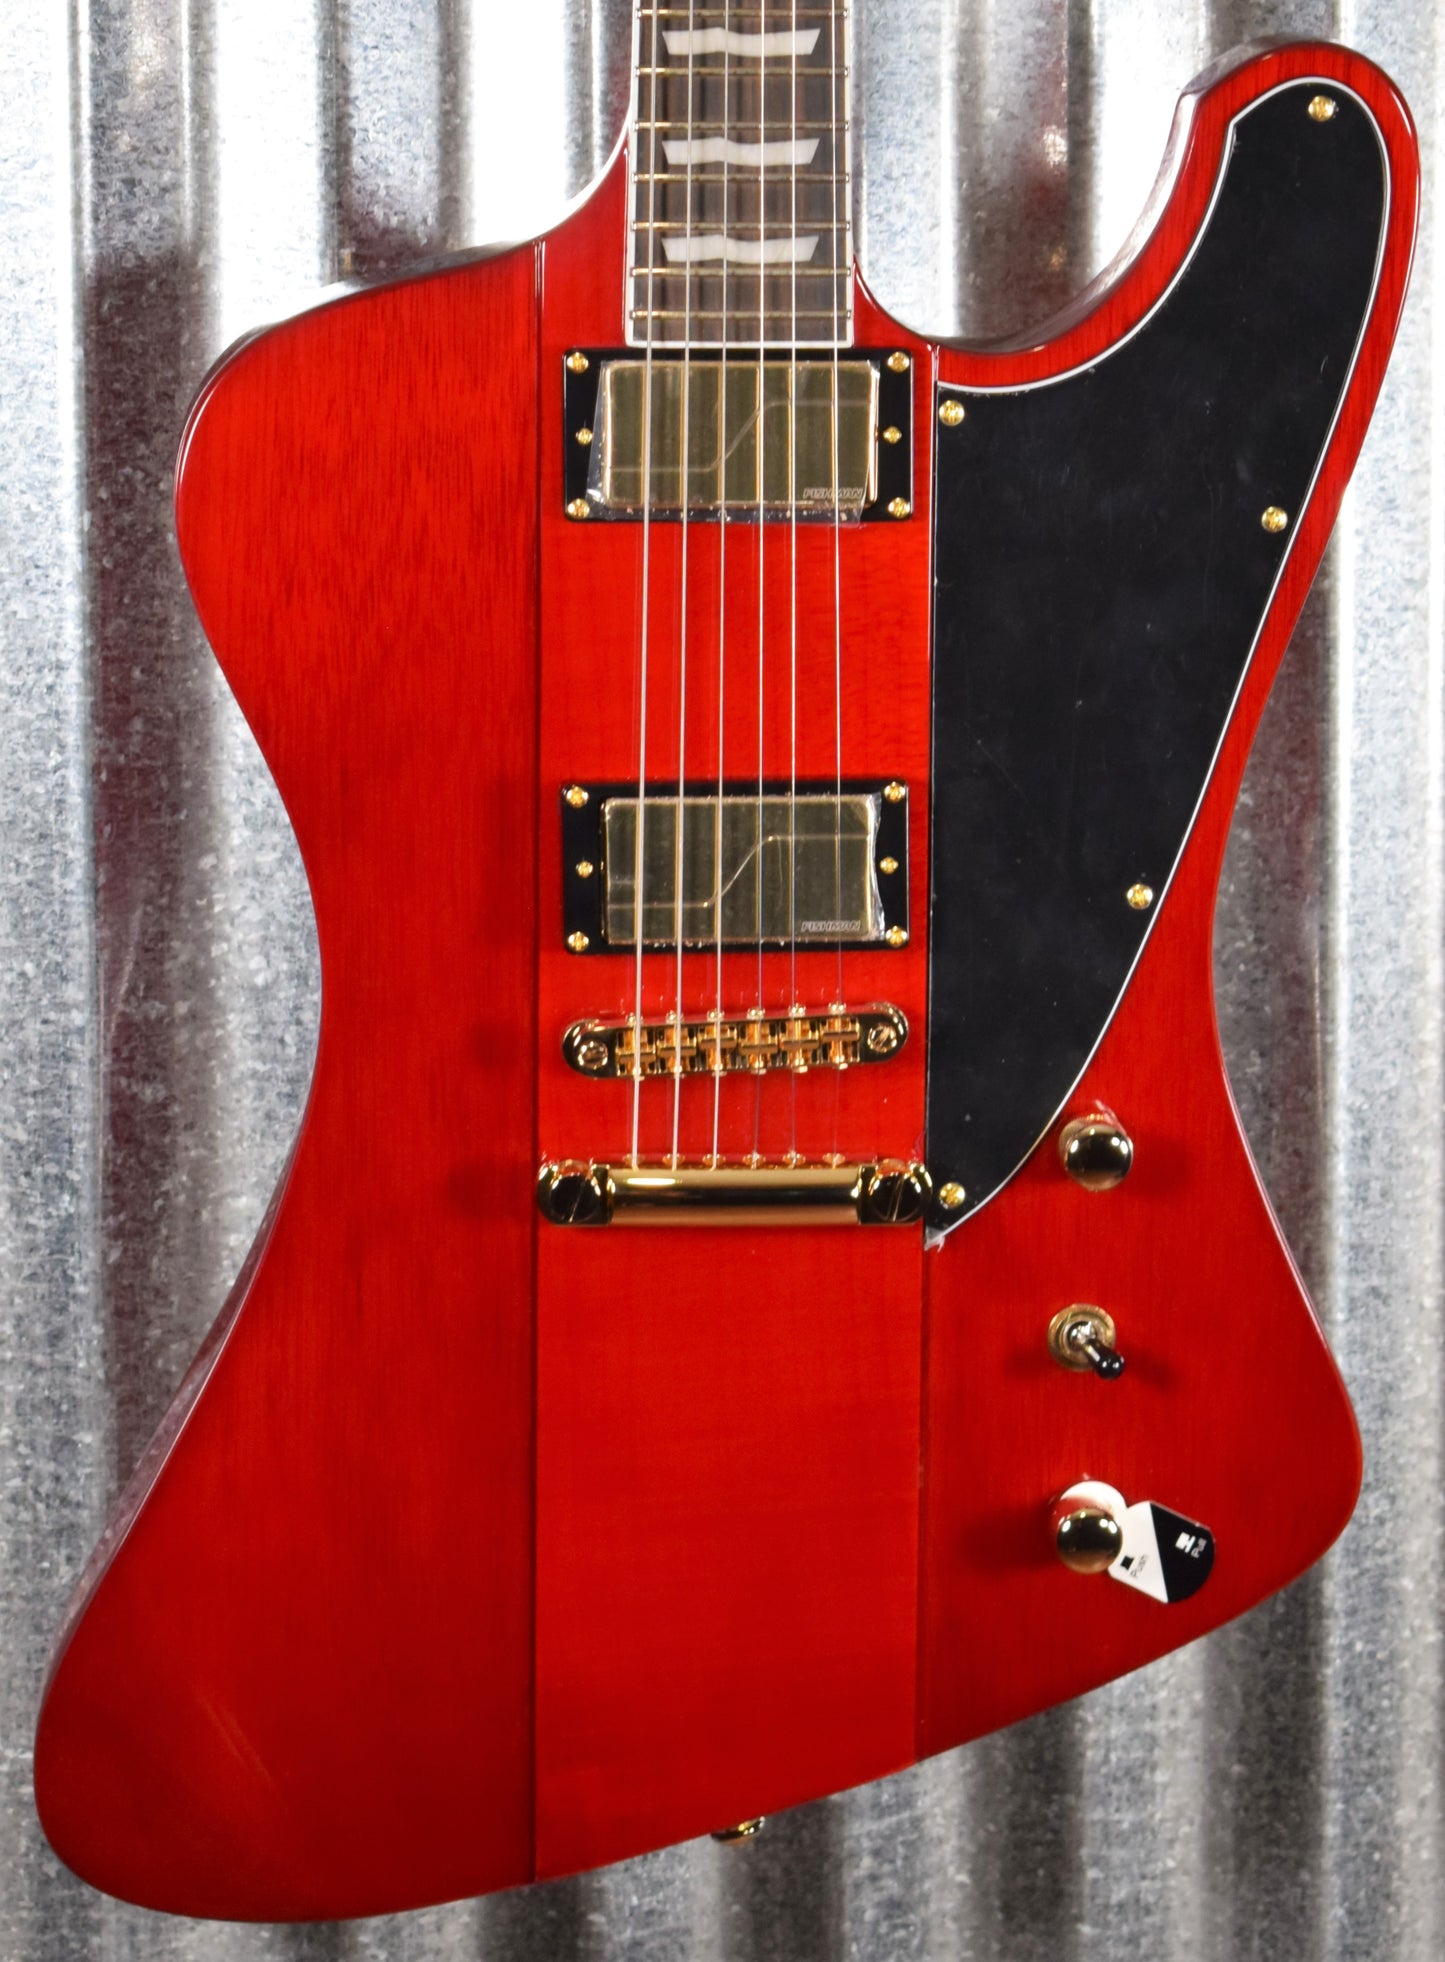 ESP LTD Phoenix 1000 See Thru Black Cherry Fishman Fluence Guitar PHOENIX1000STBC #1155